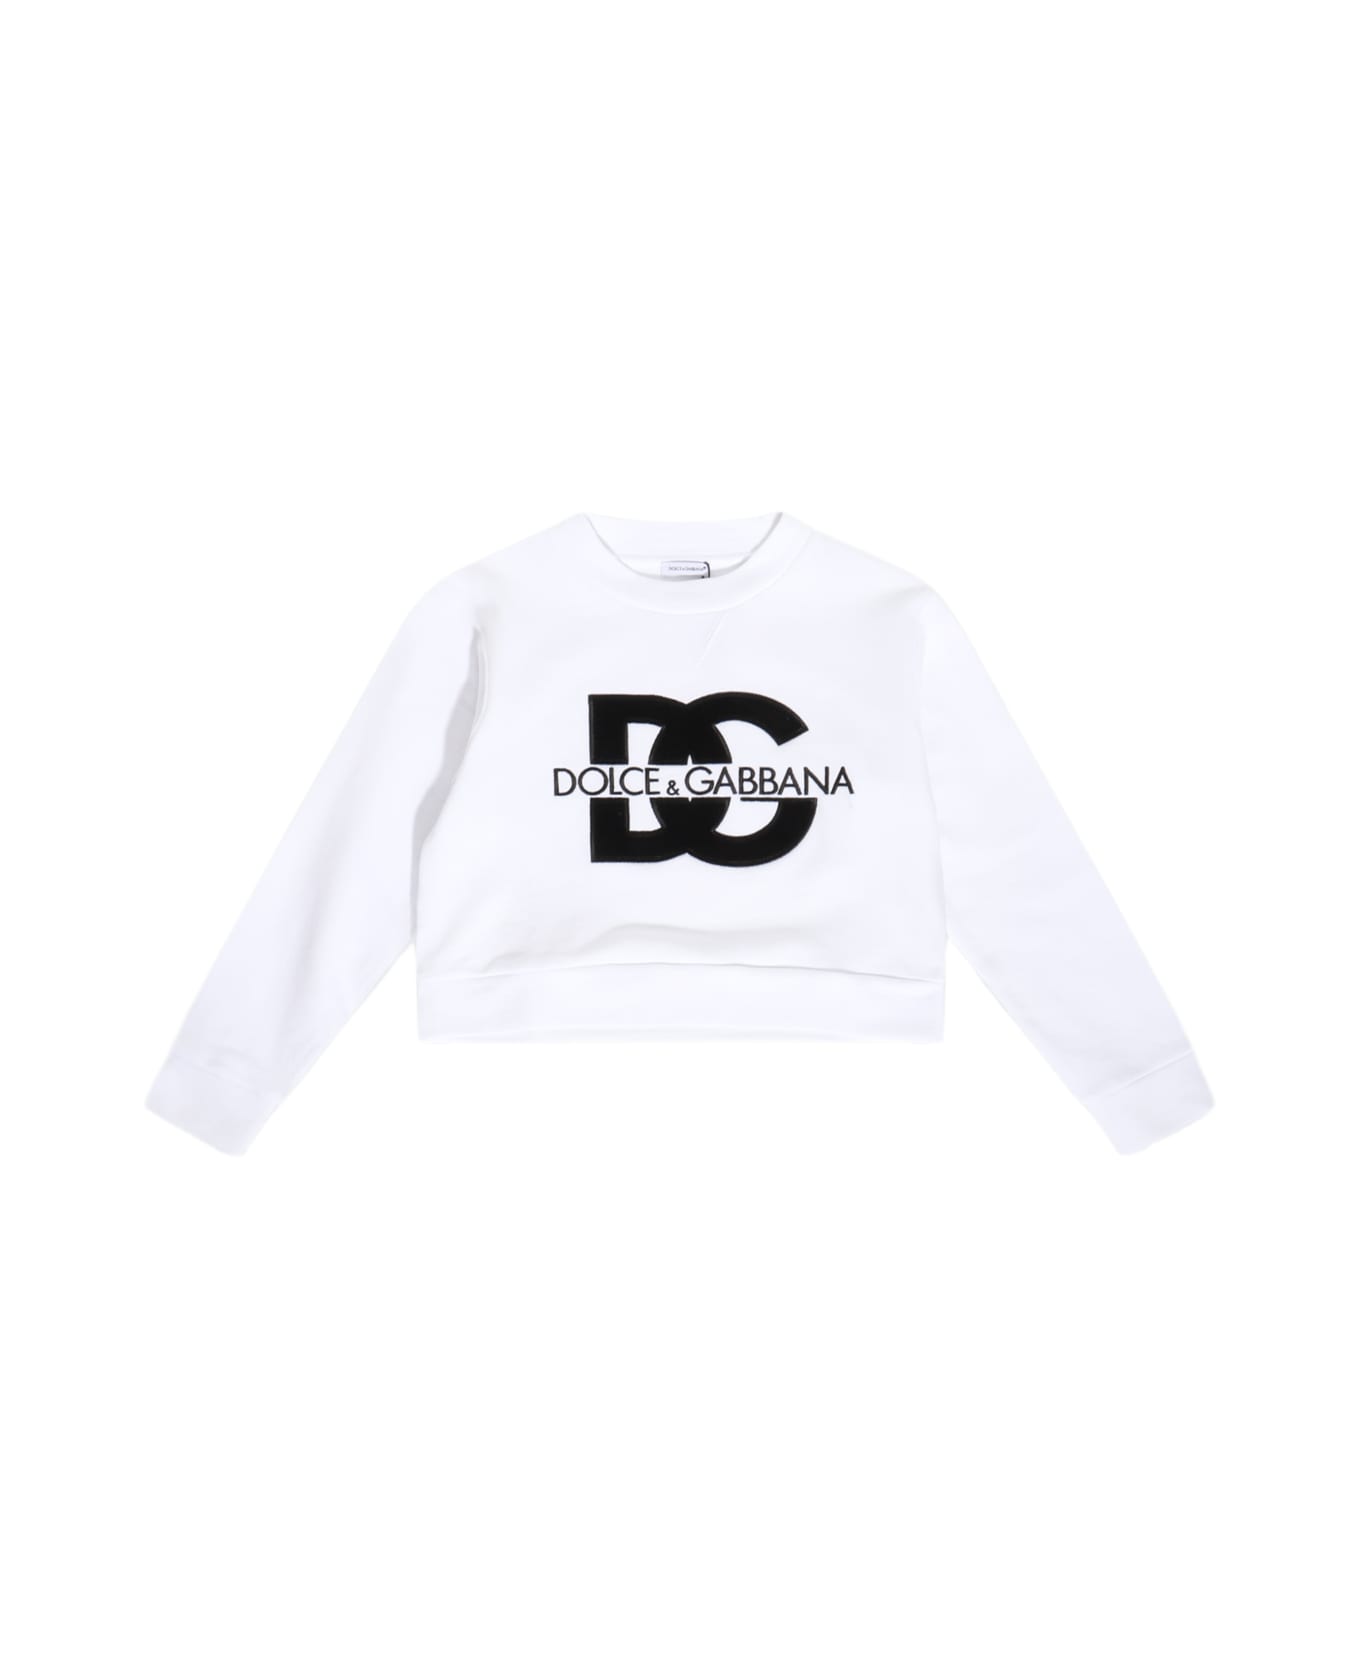 Dolce & Gabbana White Cotton Sweatshirt - White